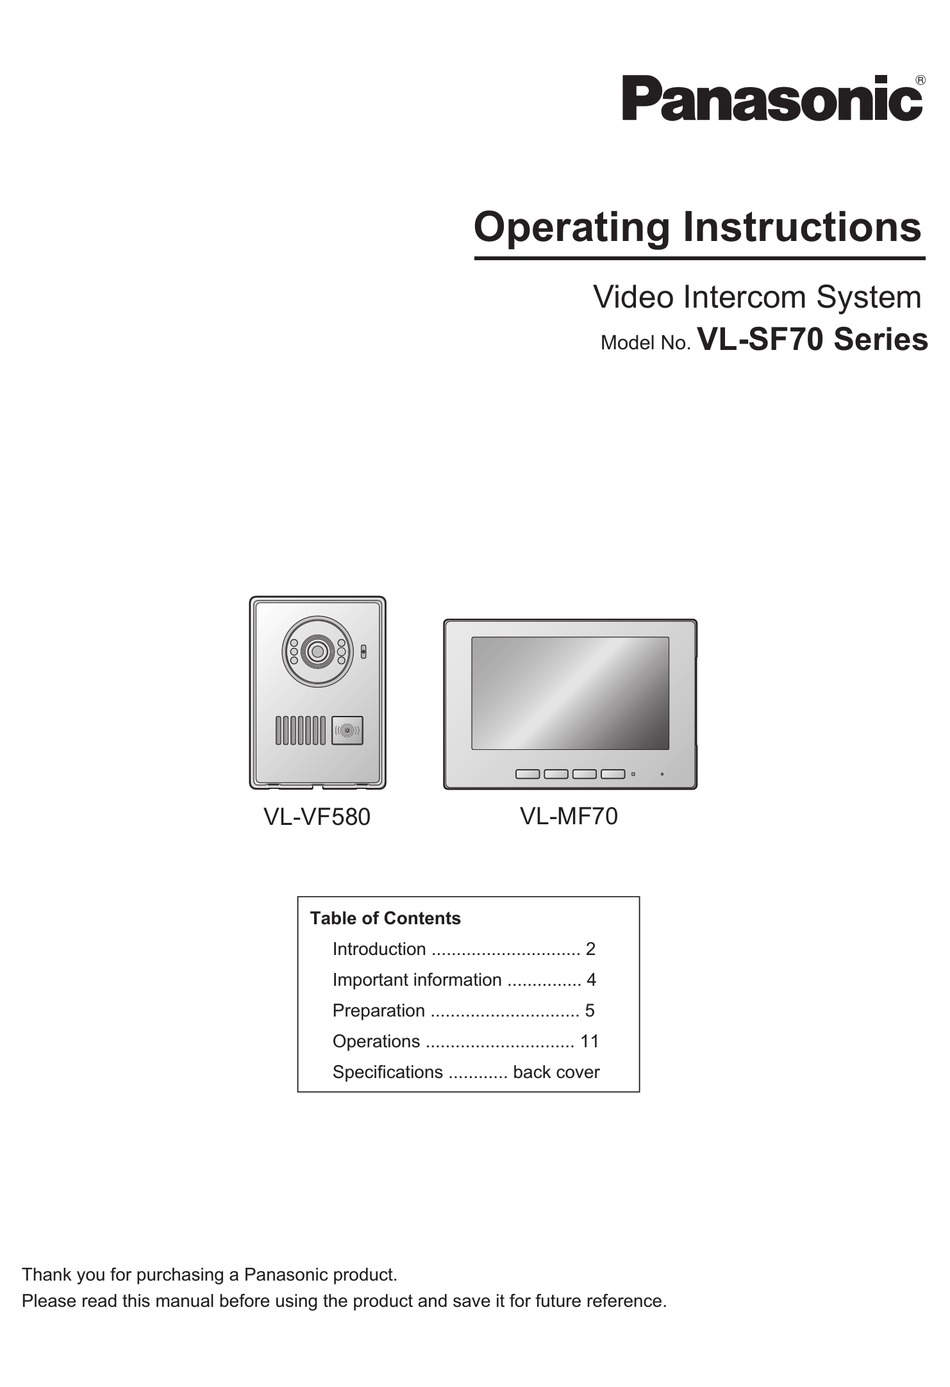 PANASONIC VL-VF580 OPERATING INSTRUCTIONS MANUAL Pdf Download 